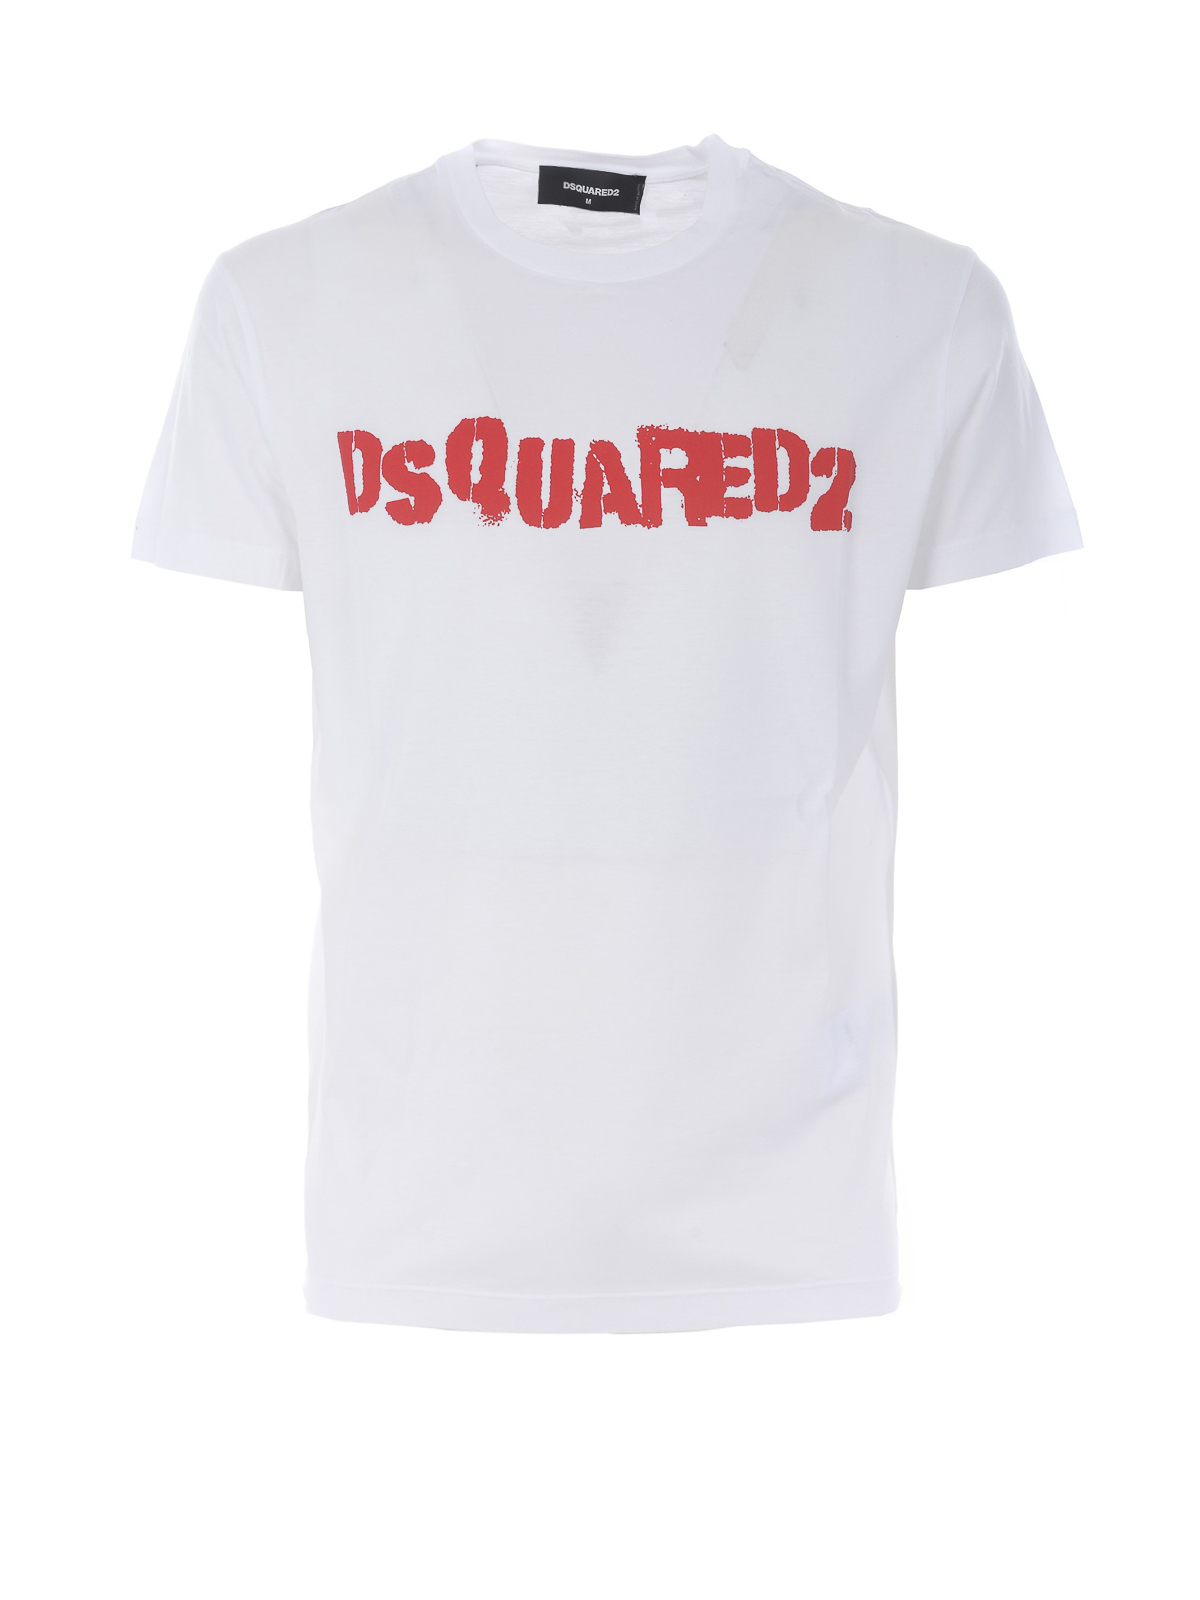 dsquared2 shirt logo